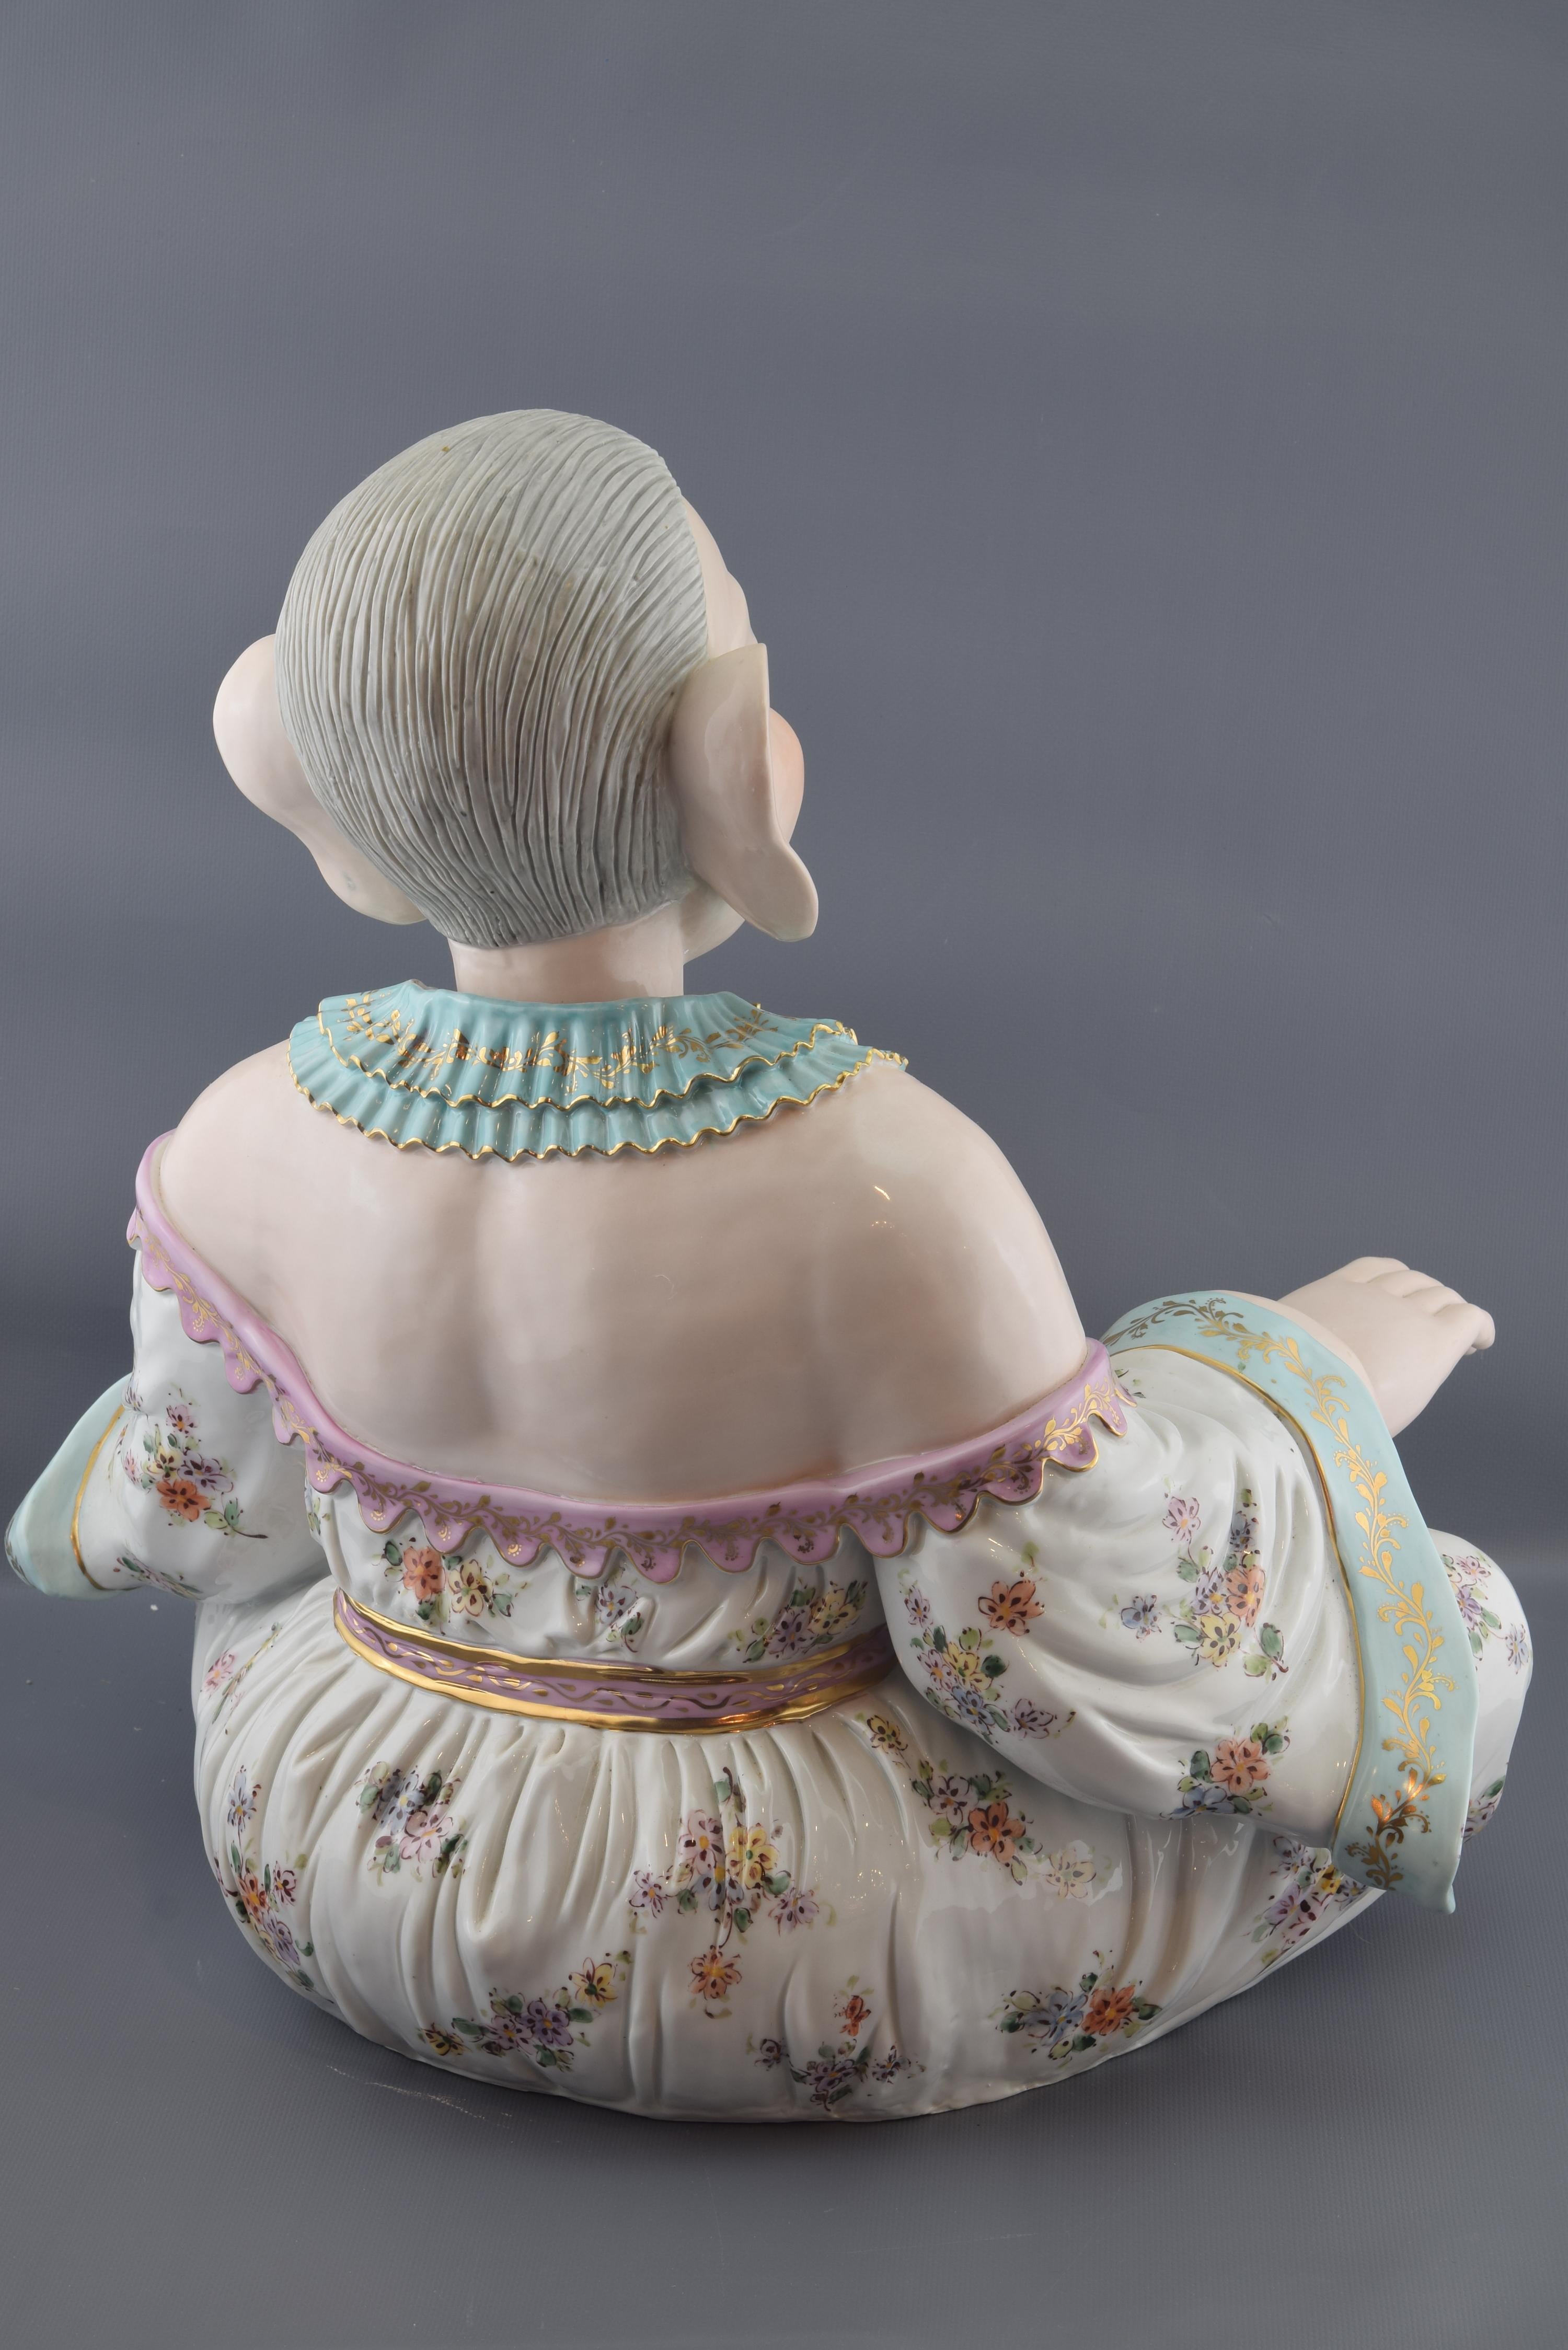 20th Century Oriental Nodding Porcelain Figurine, after 18th Century Models from Meissen